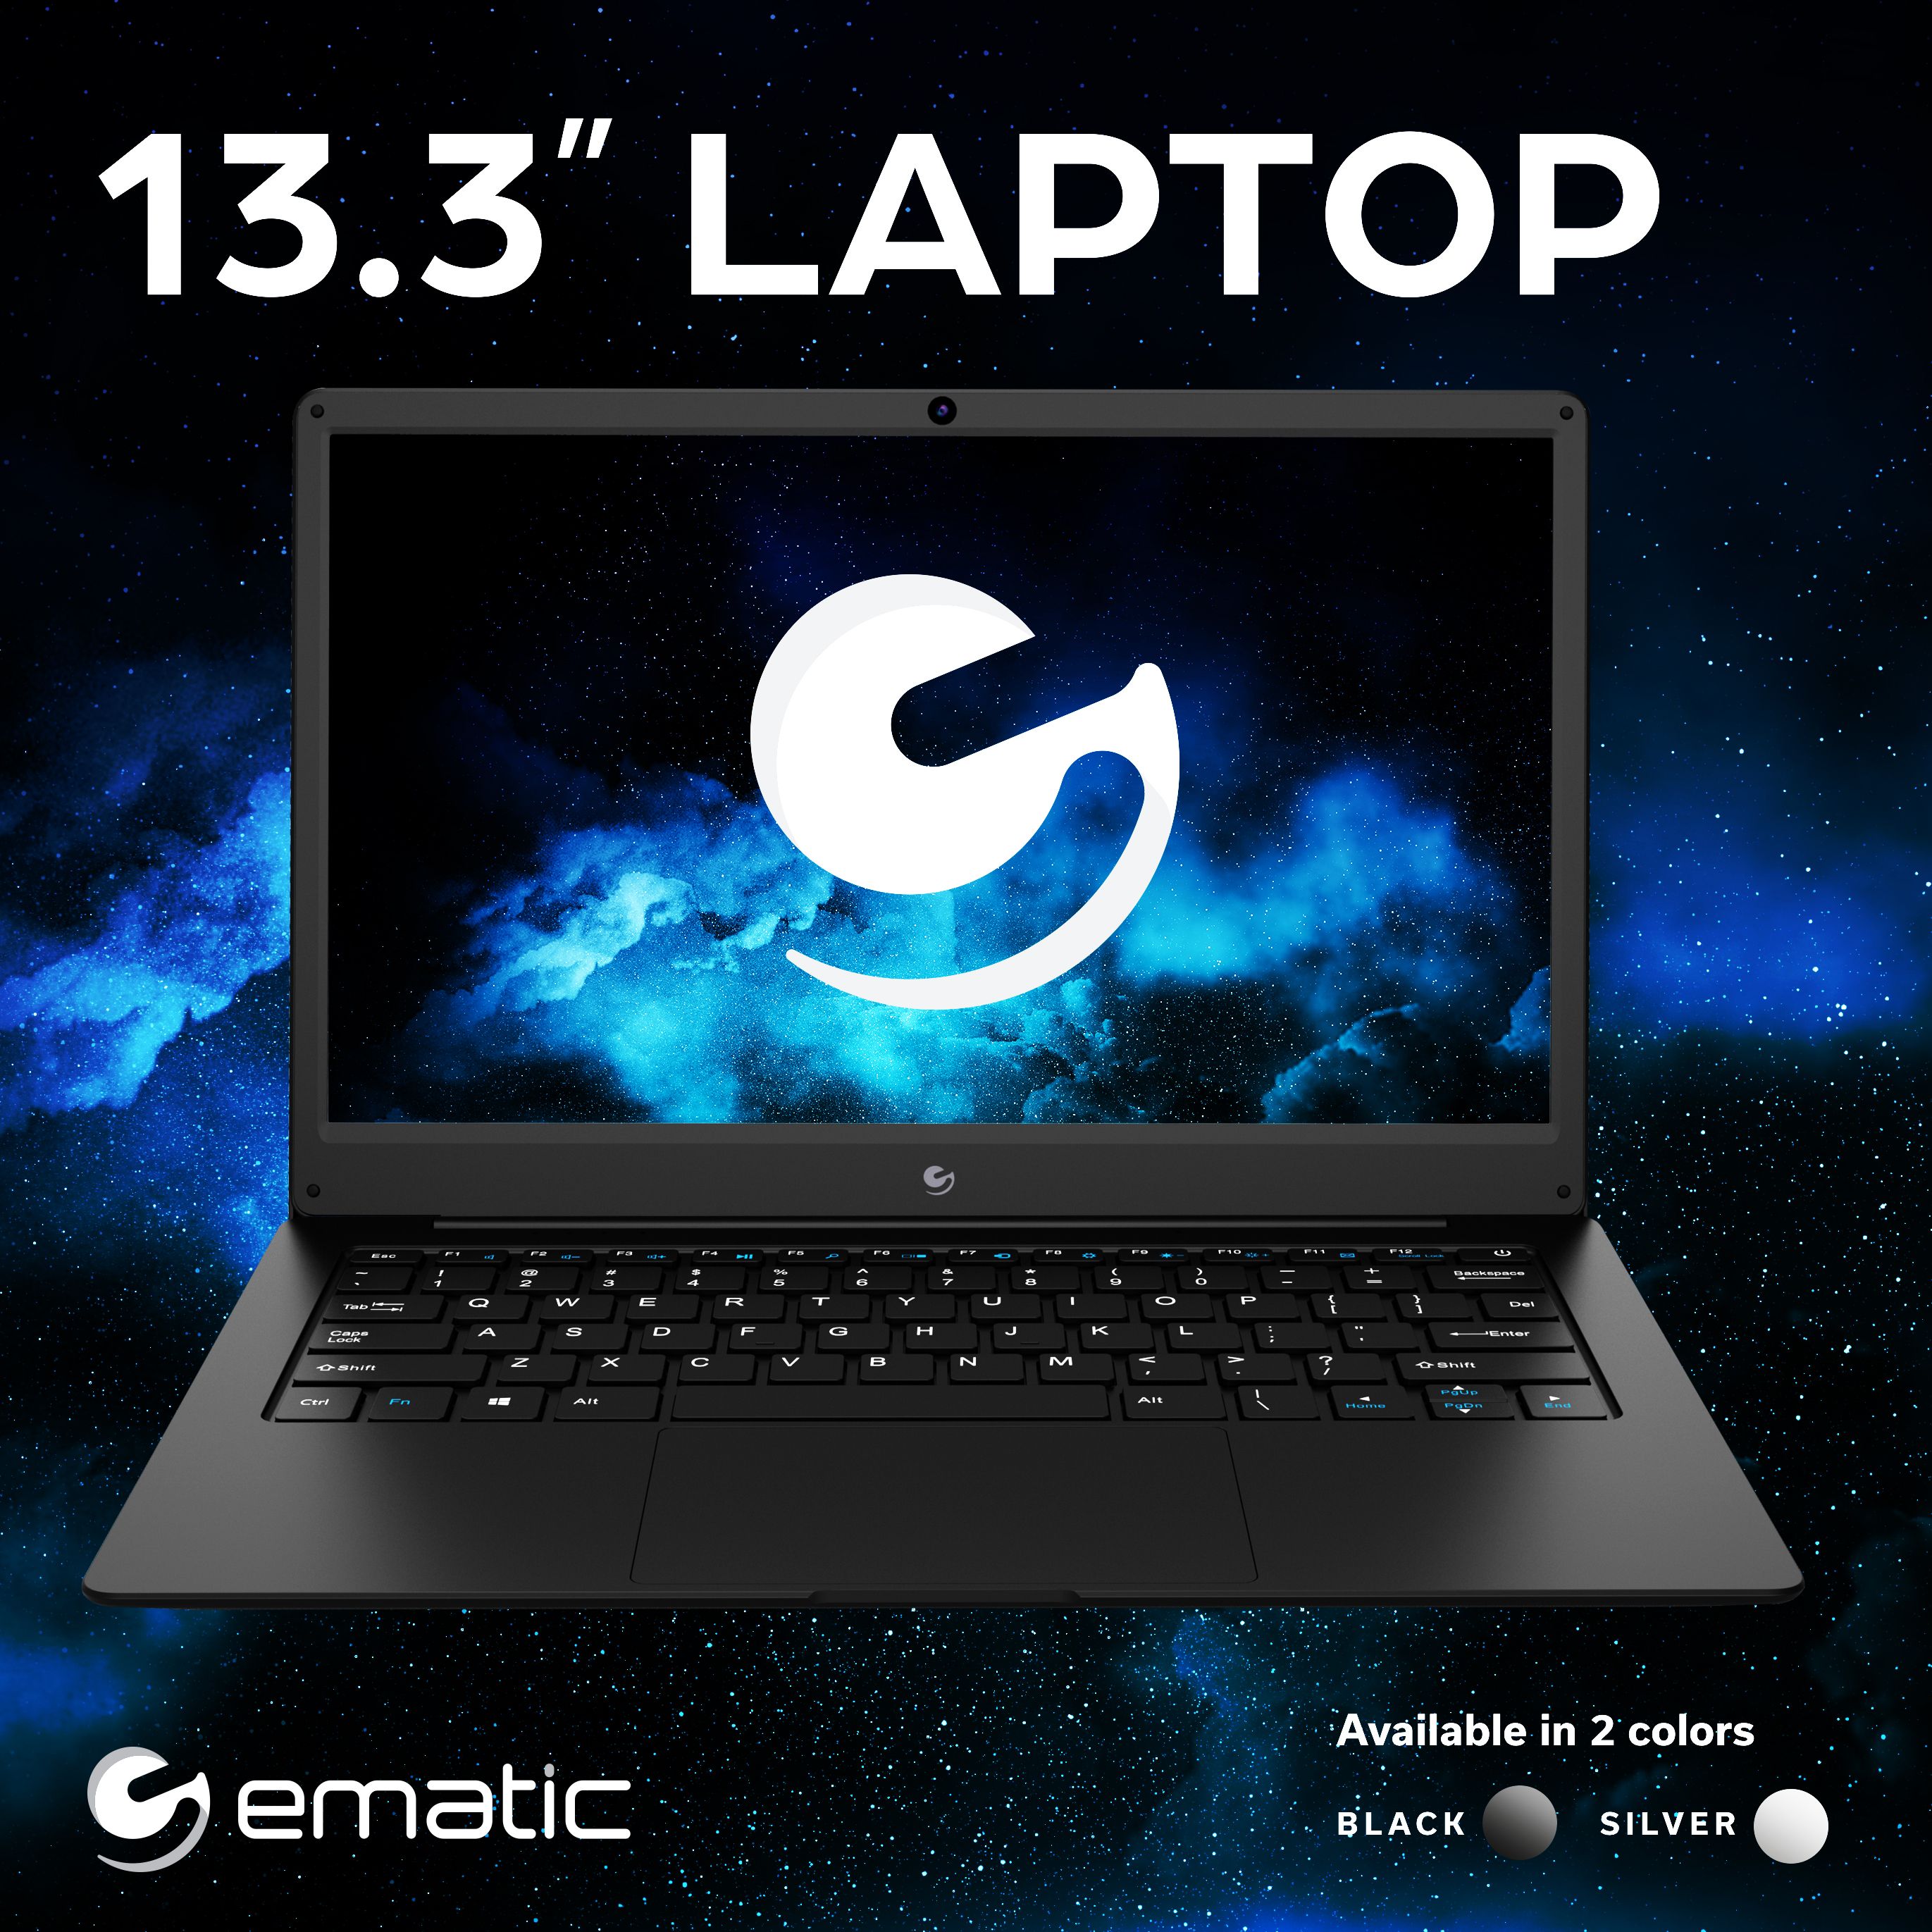 Ematic 13.3" Laptop with Full IPS HD Display, 4GB RAM, 64 GB Storage, AMD & Windows 10, Black (EWT148AB) - image 3 of 8